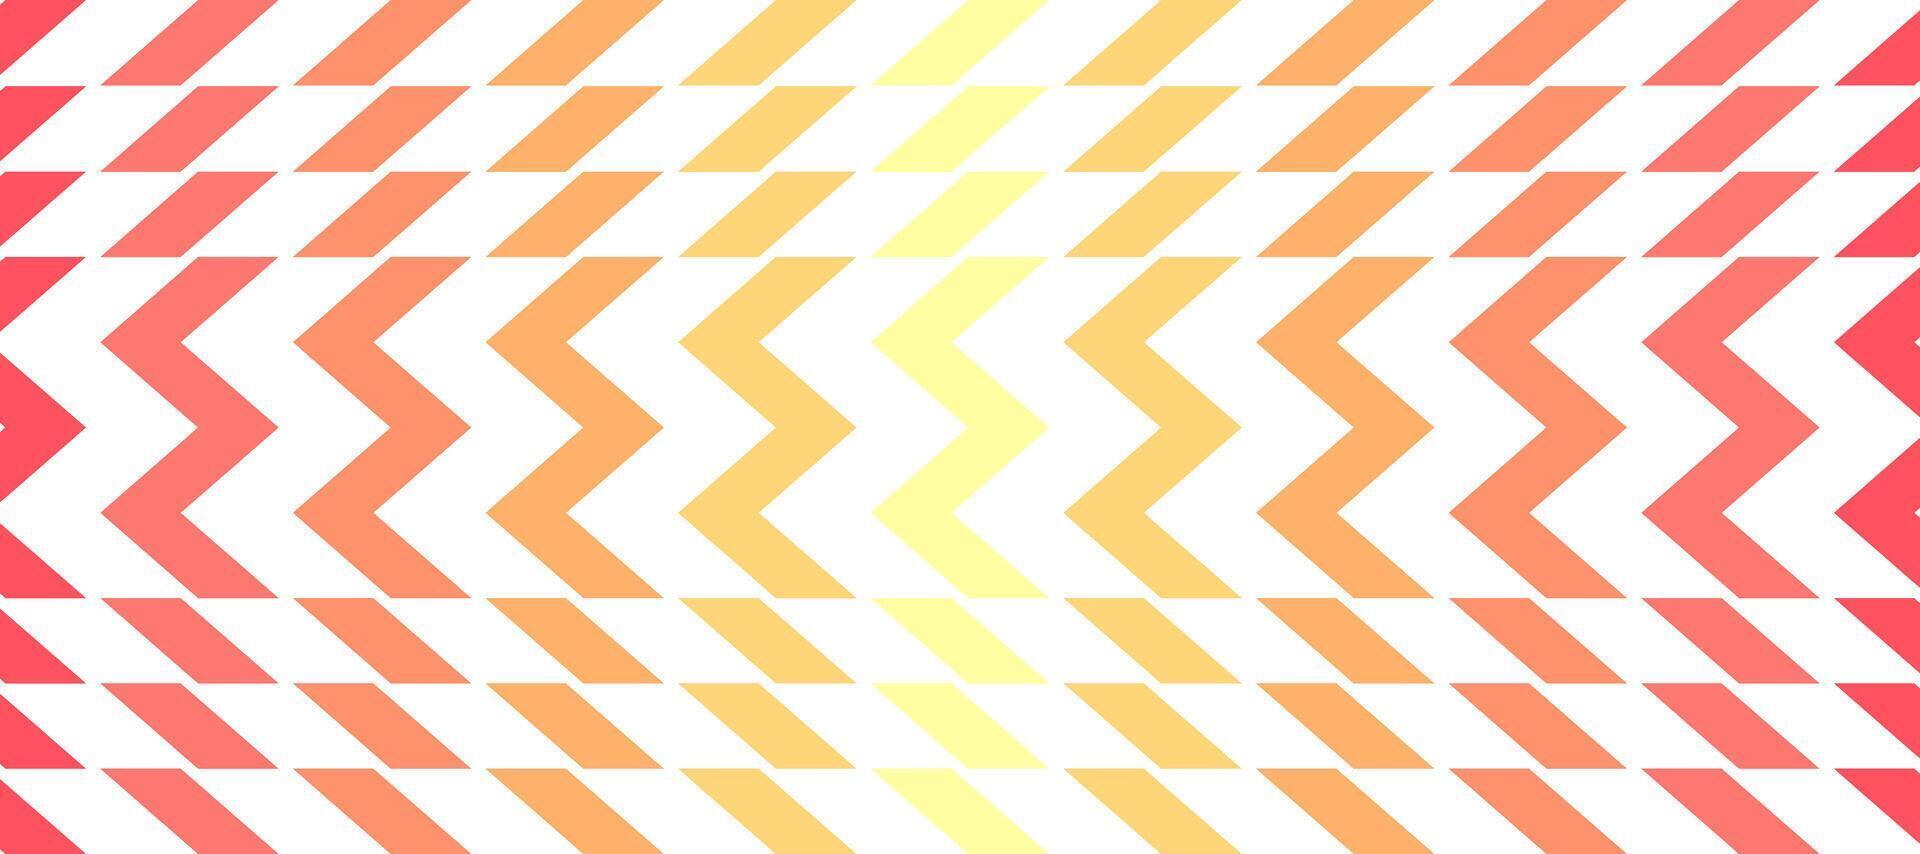 abstract orange arrow chevron decorative design background vector